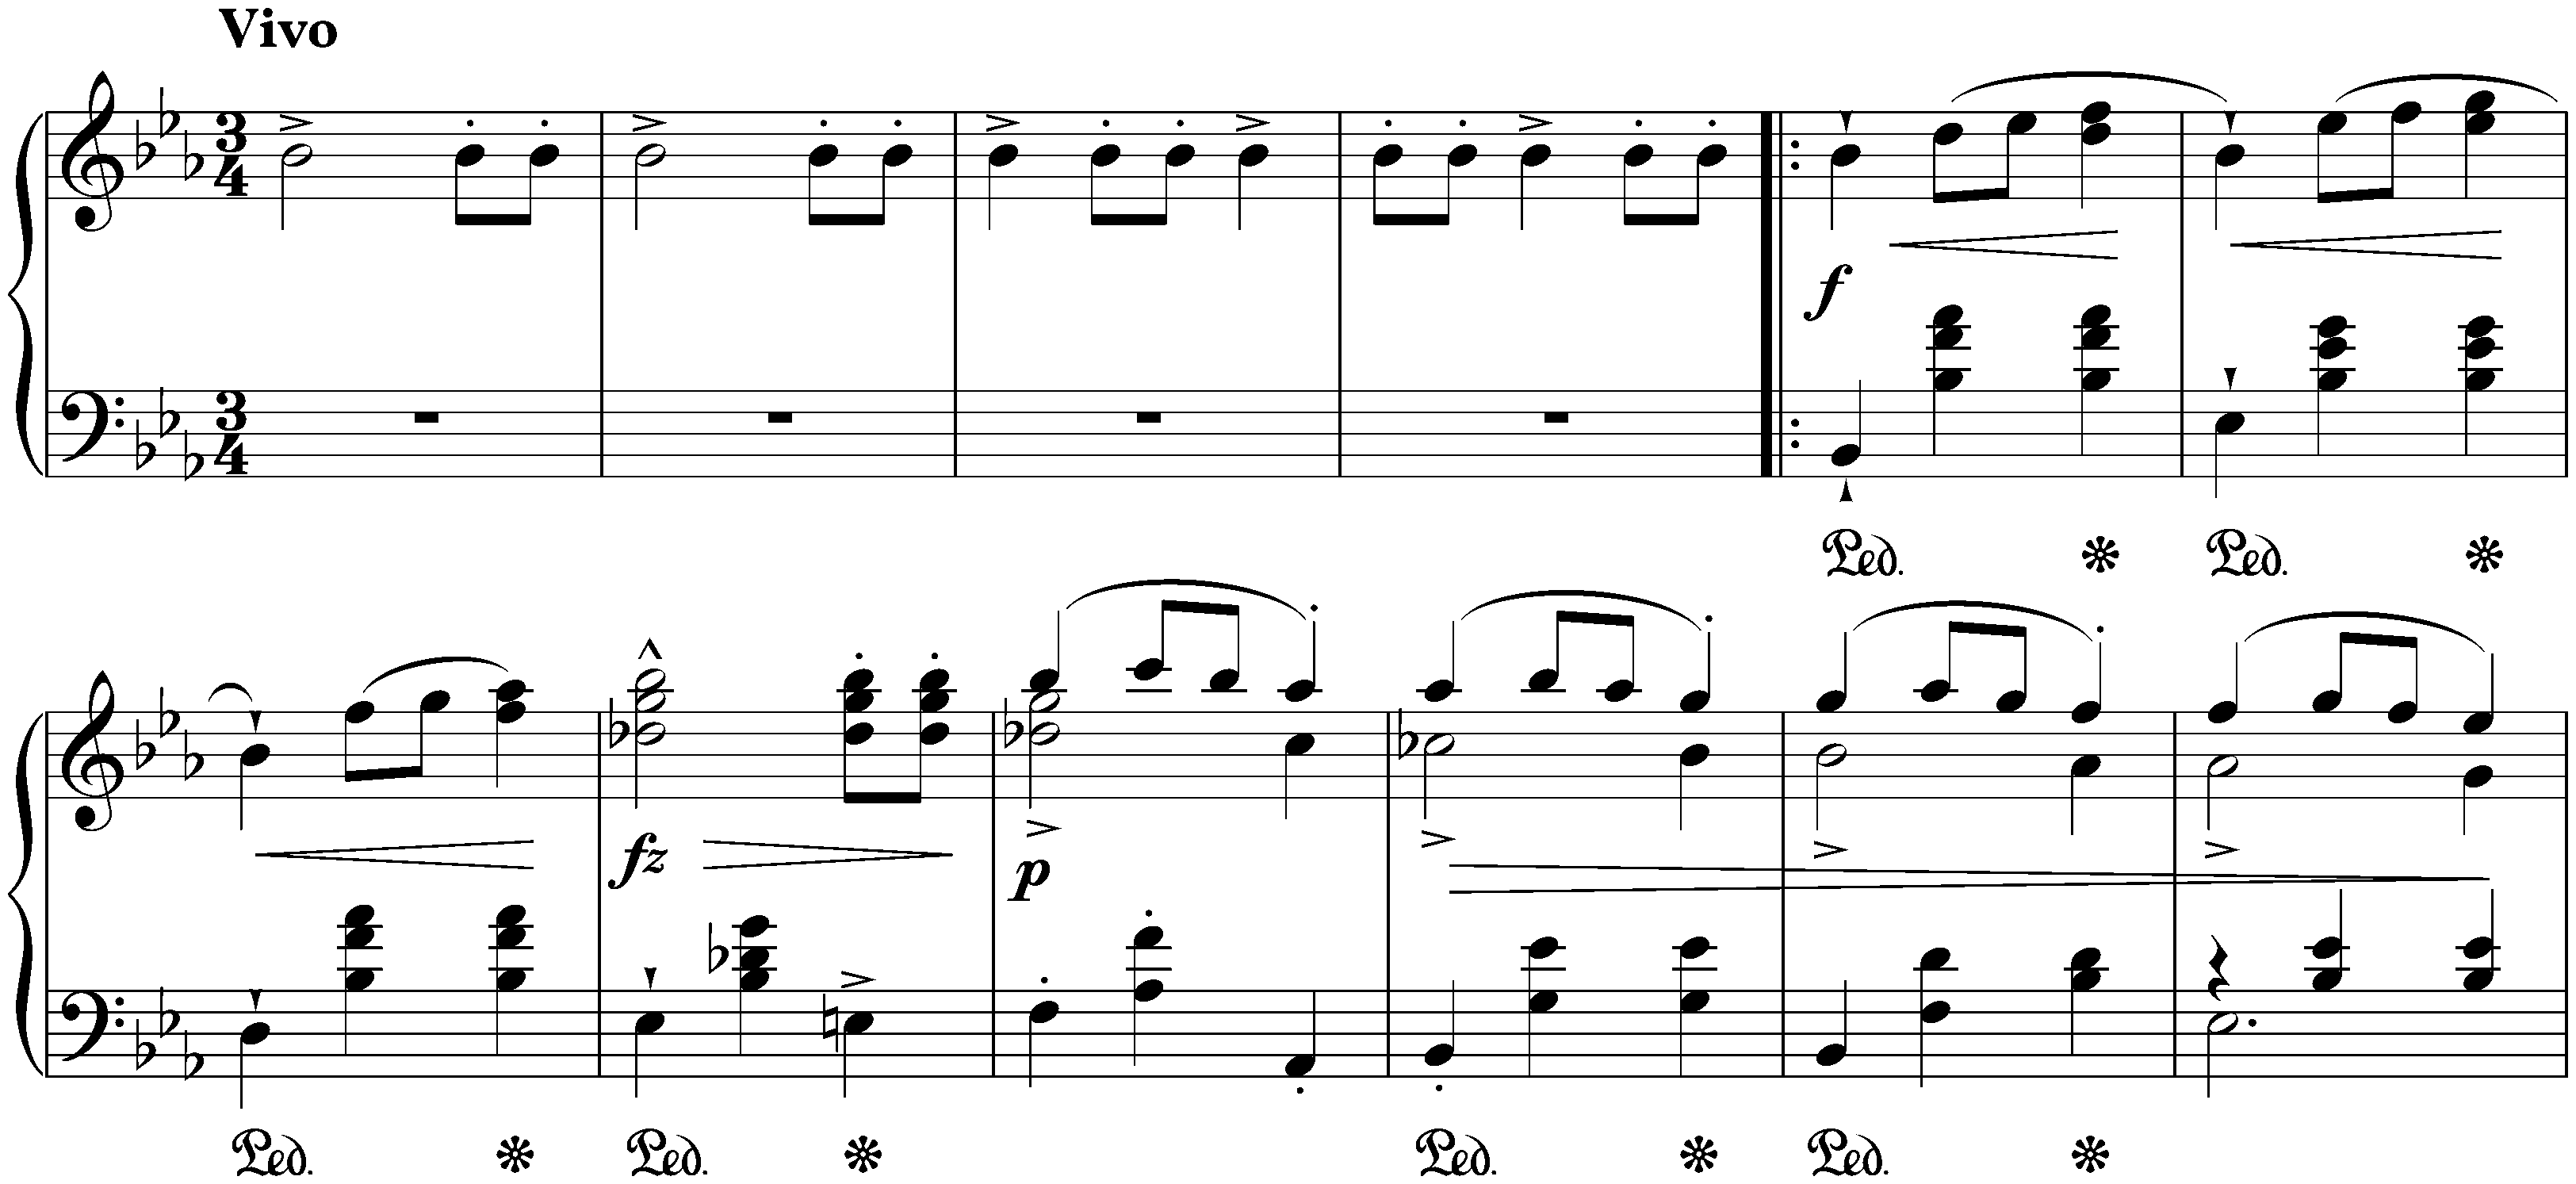 Grande Valse brillante in E-flat major, op. 18